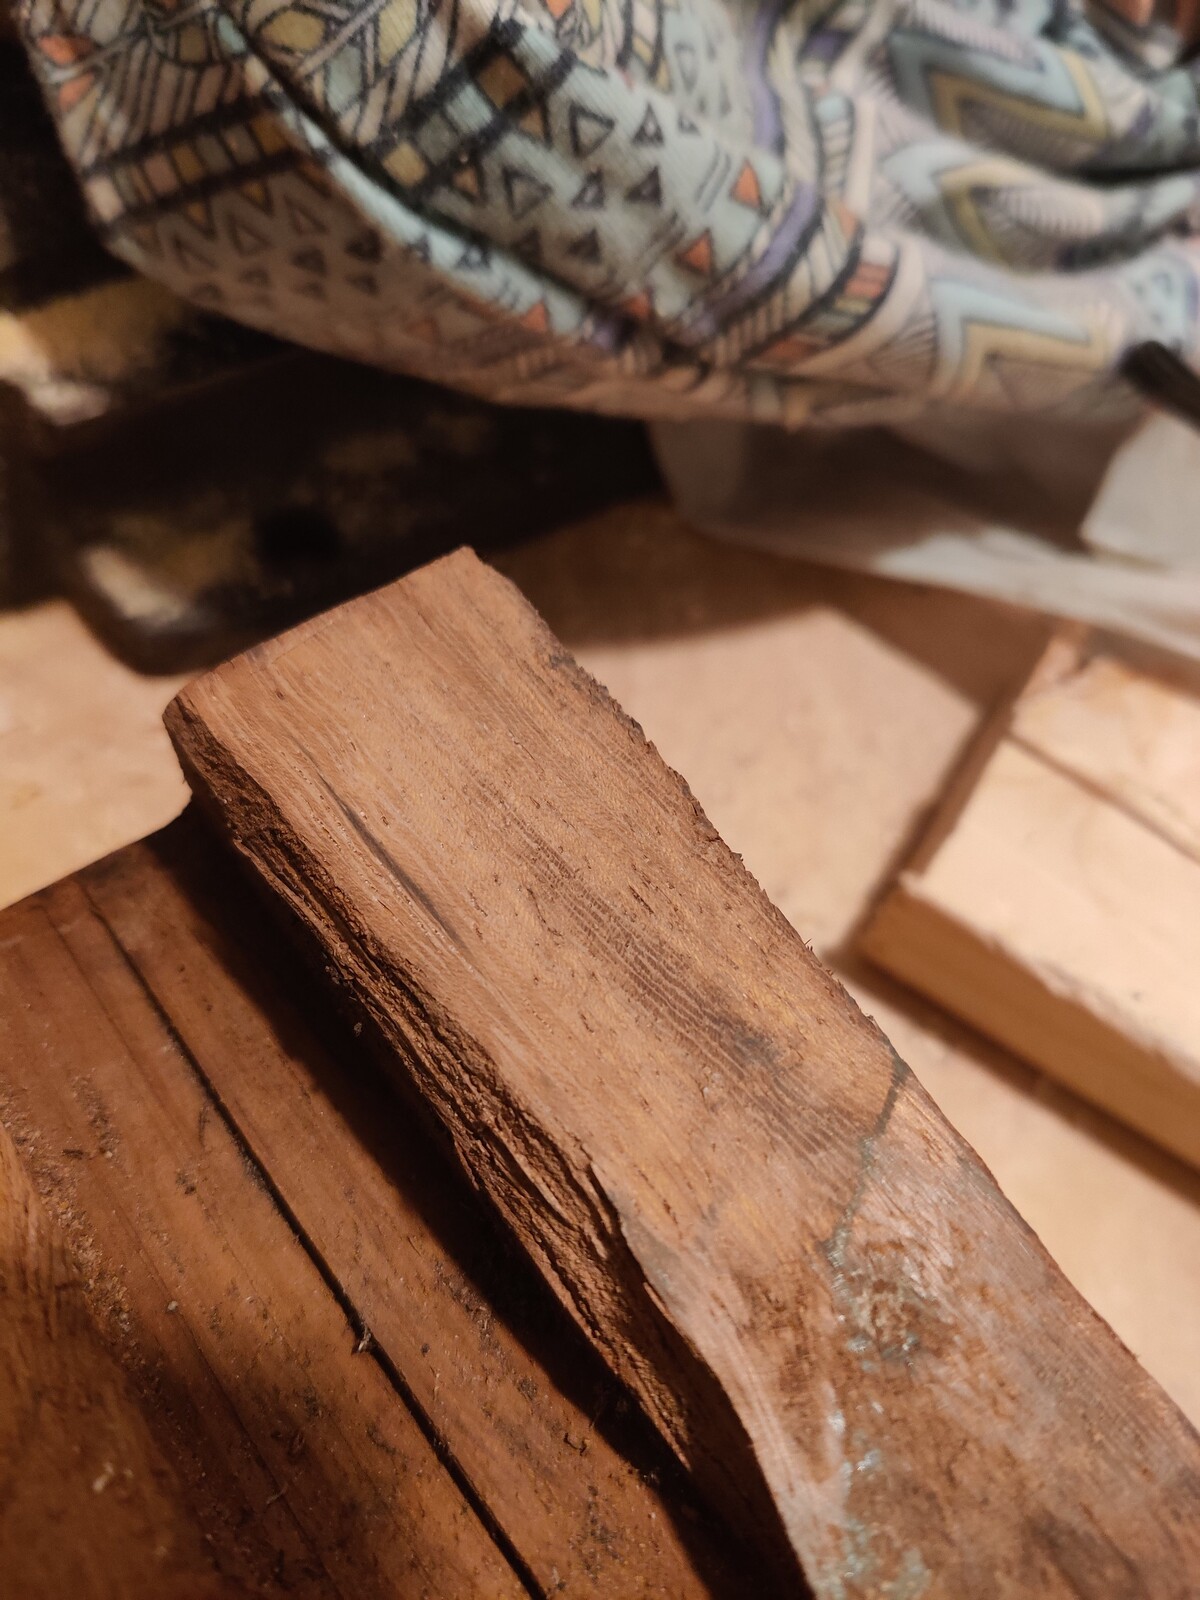 Mystery wood block planed